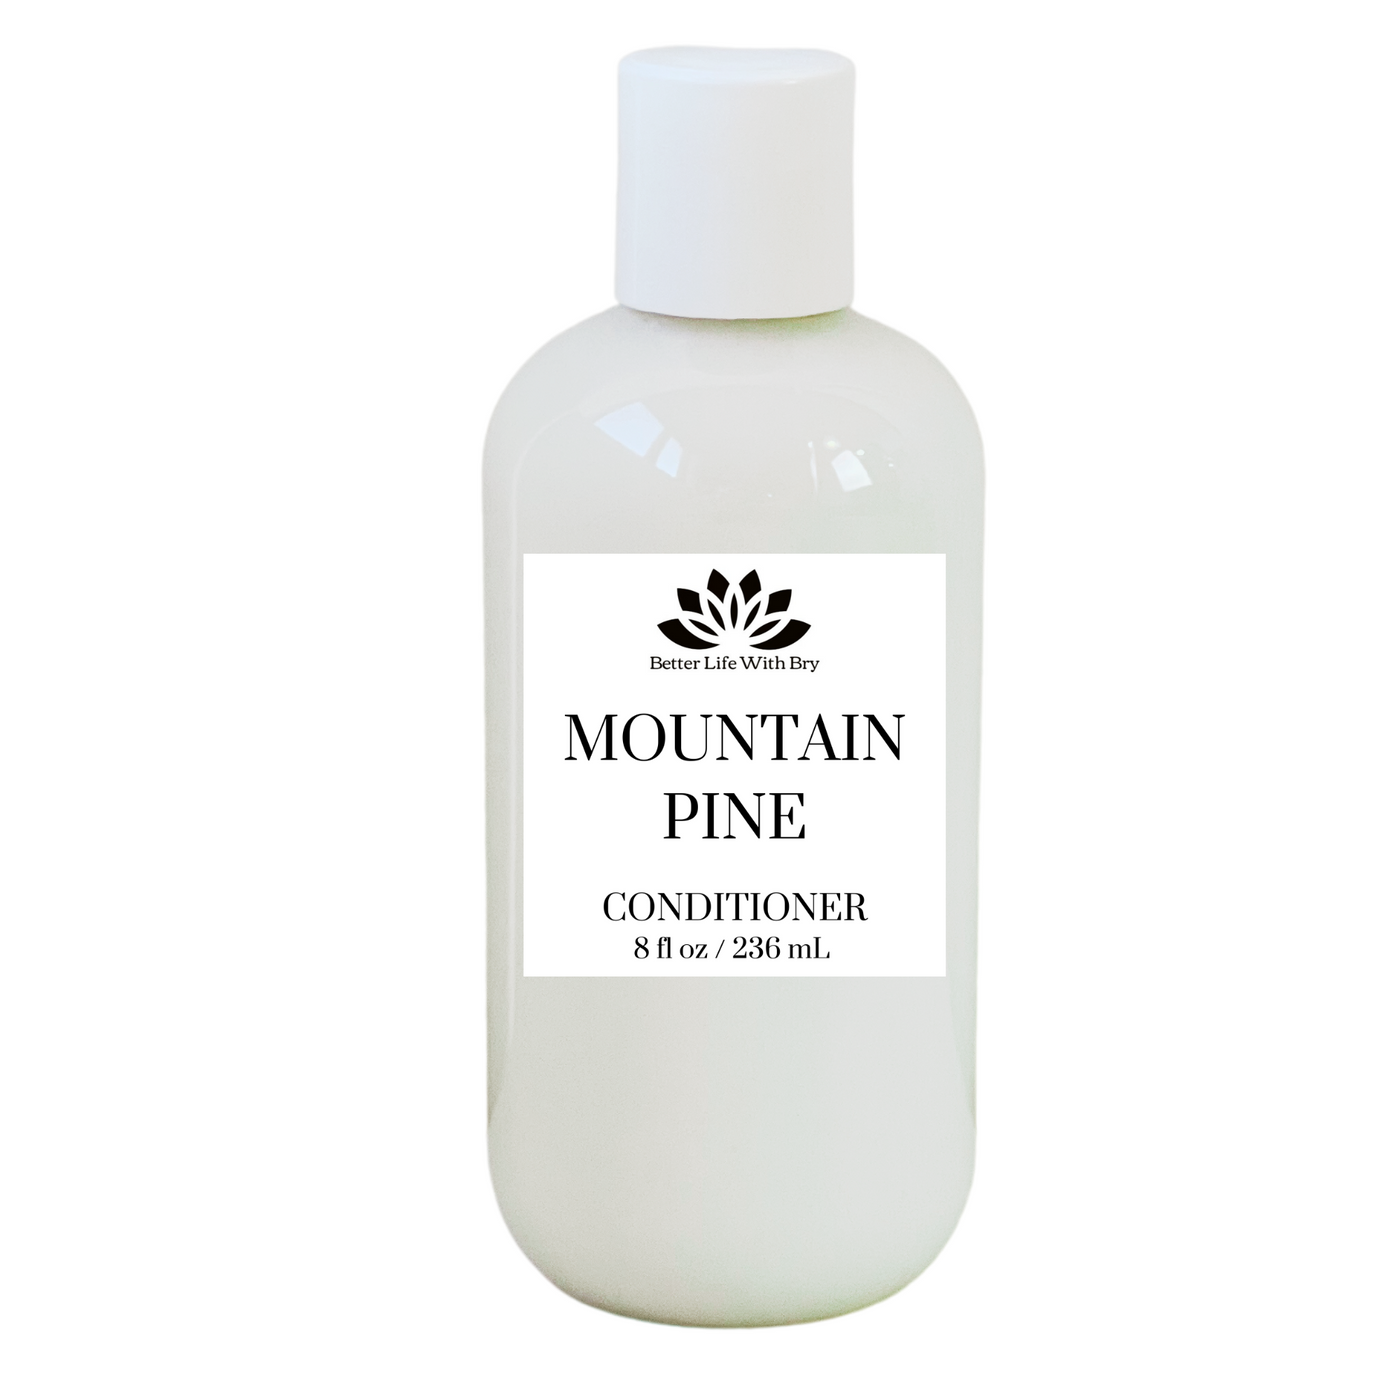 Mountain Pine Hair Shampoo/Conditioner